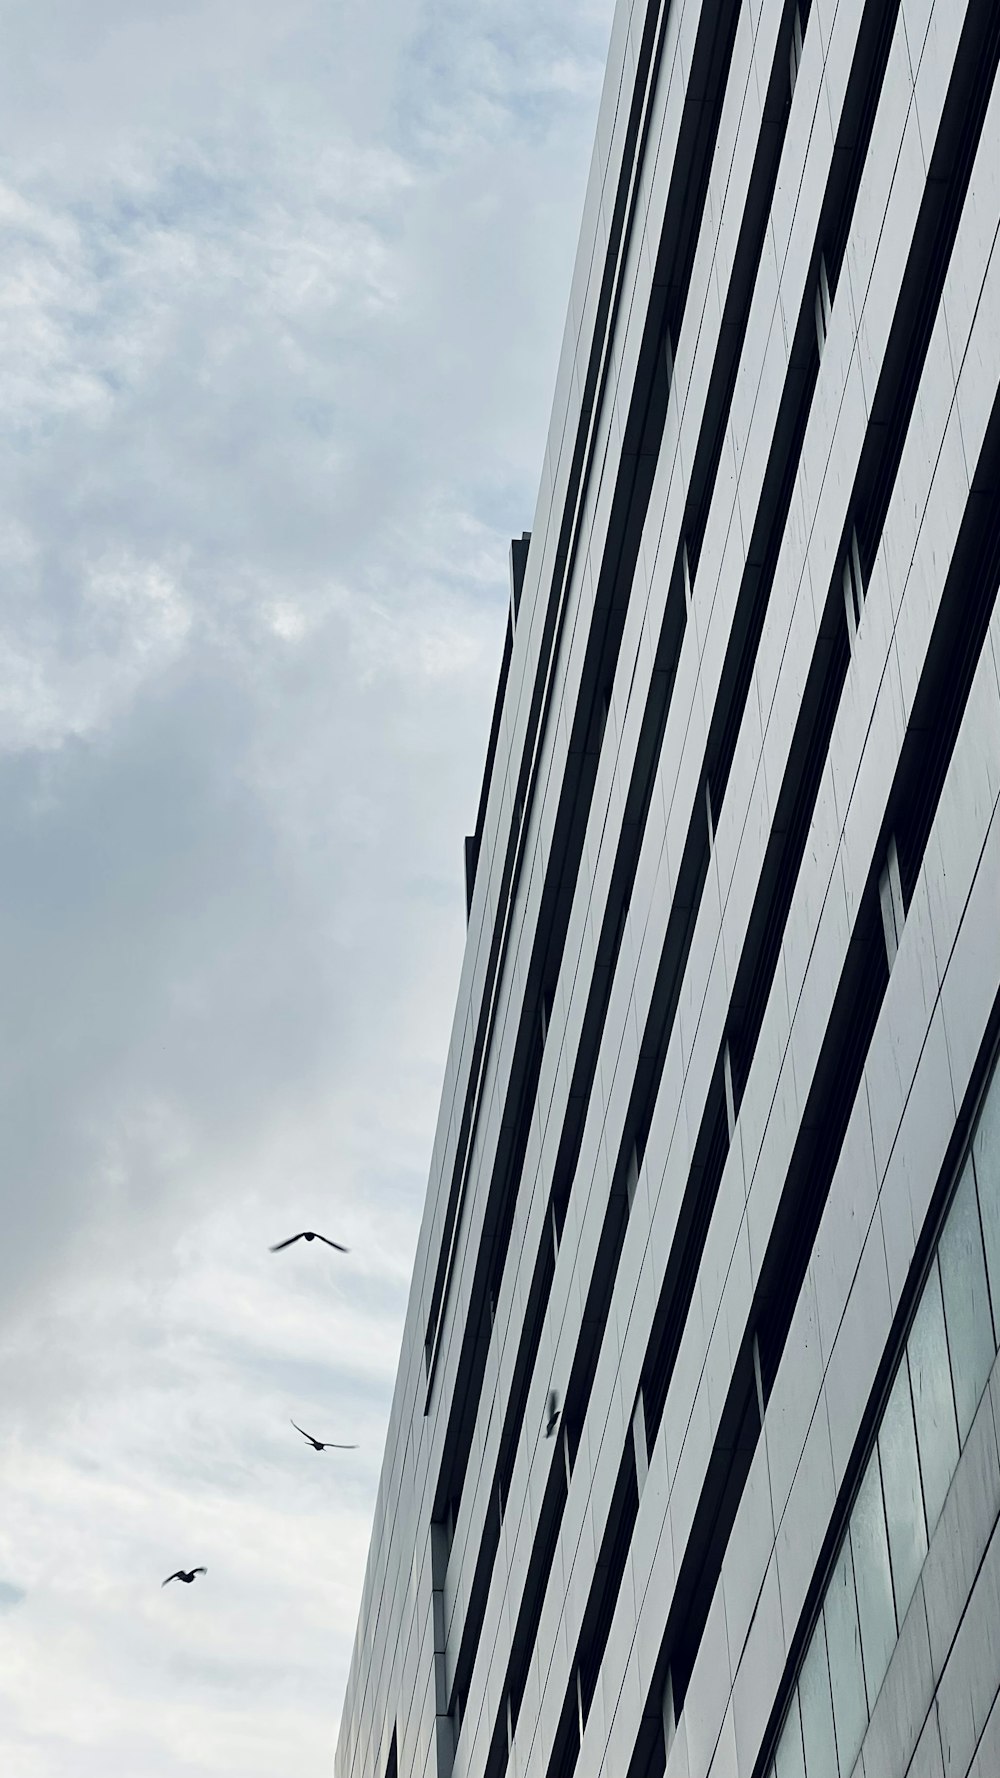 birds flying near a building